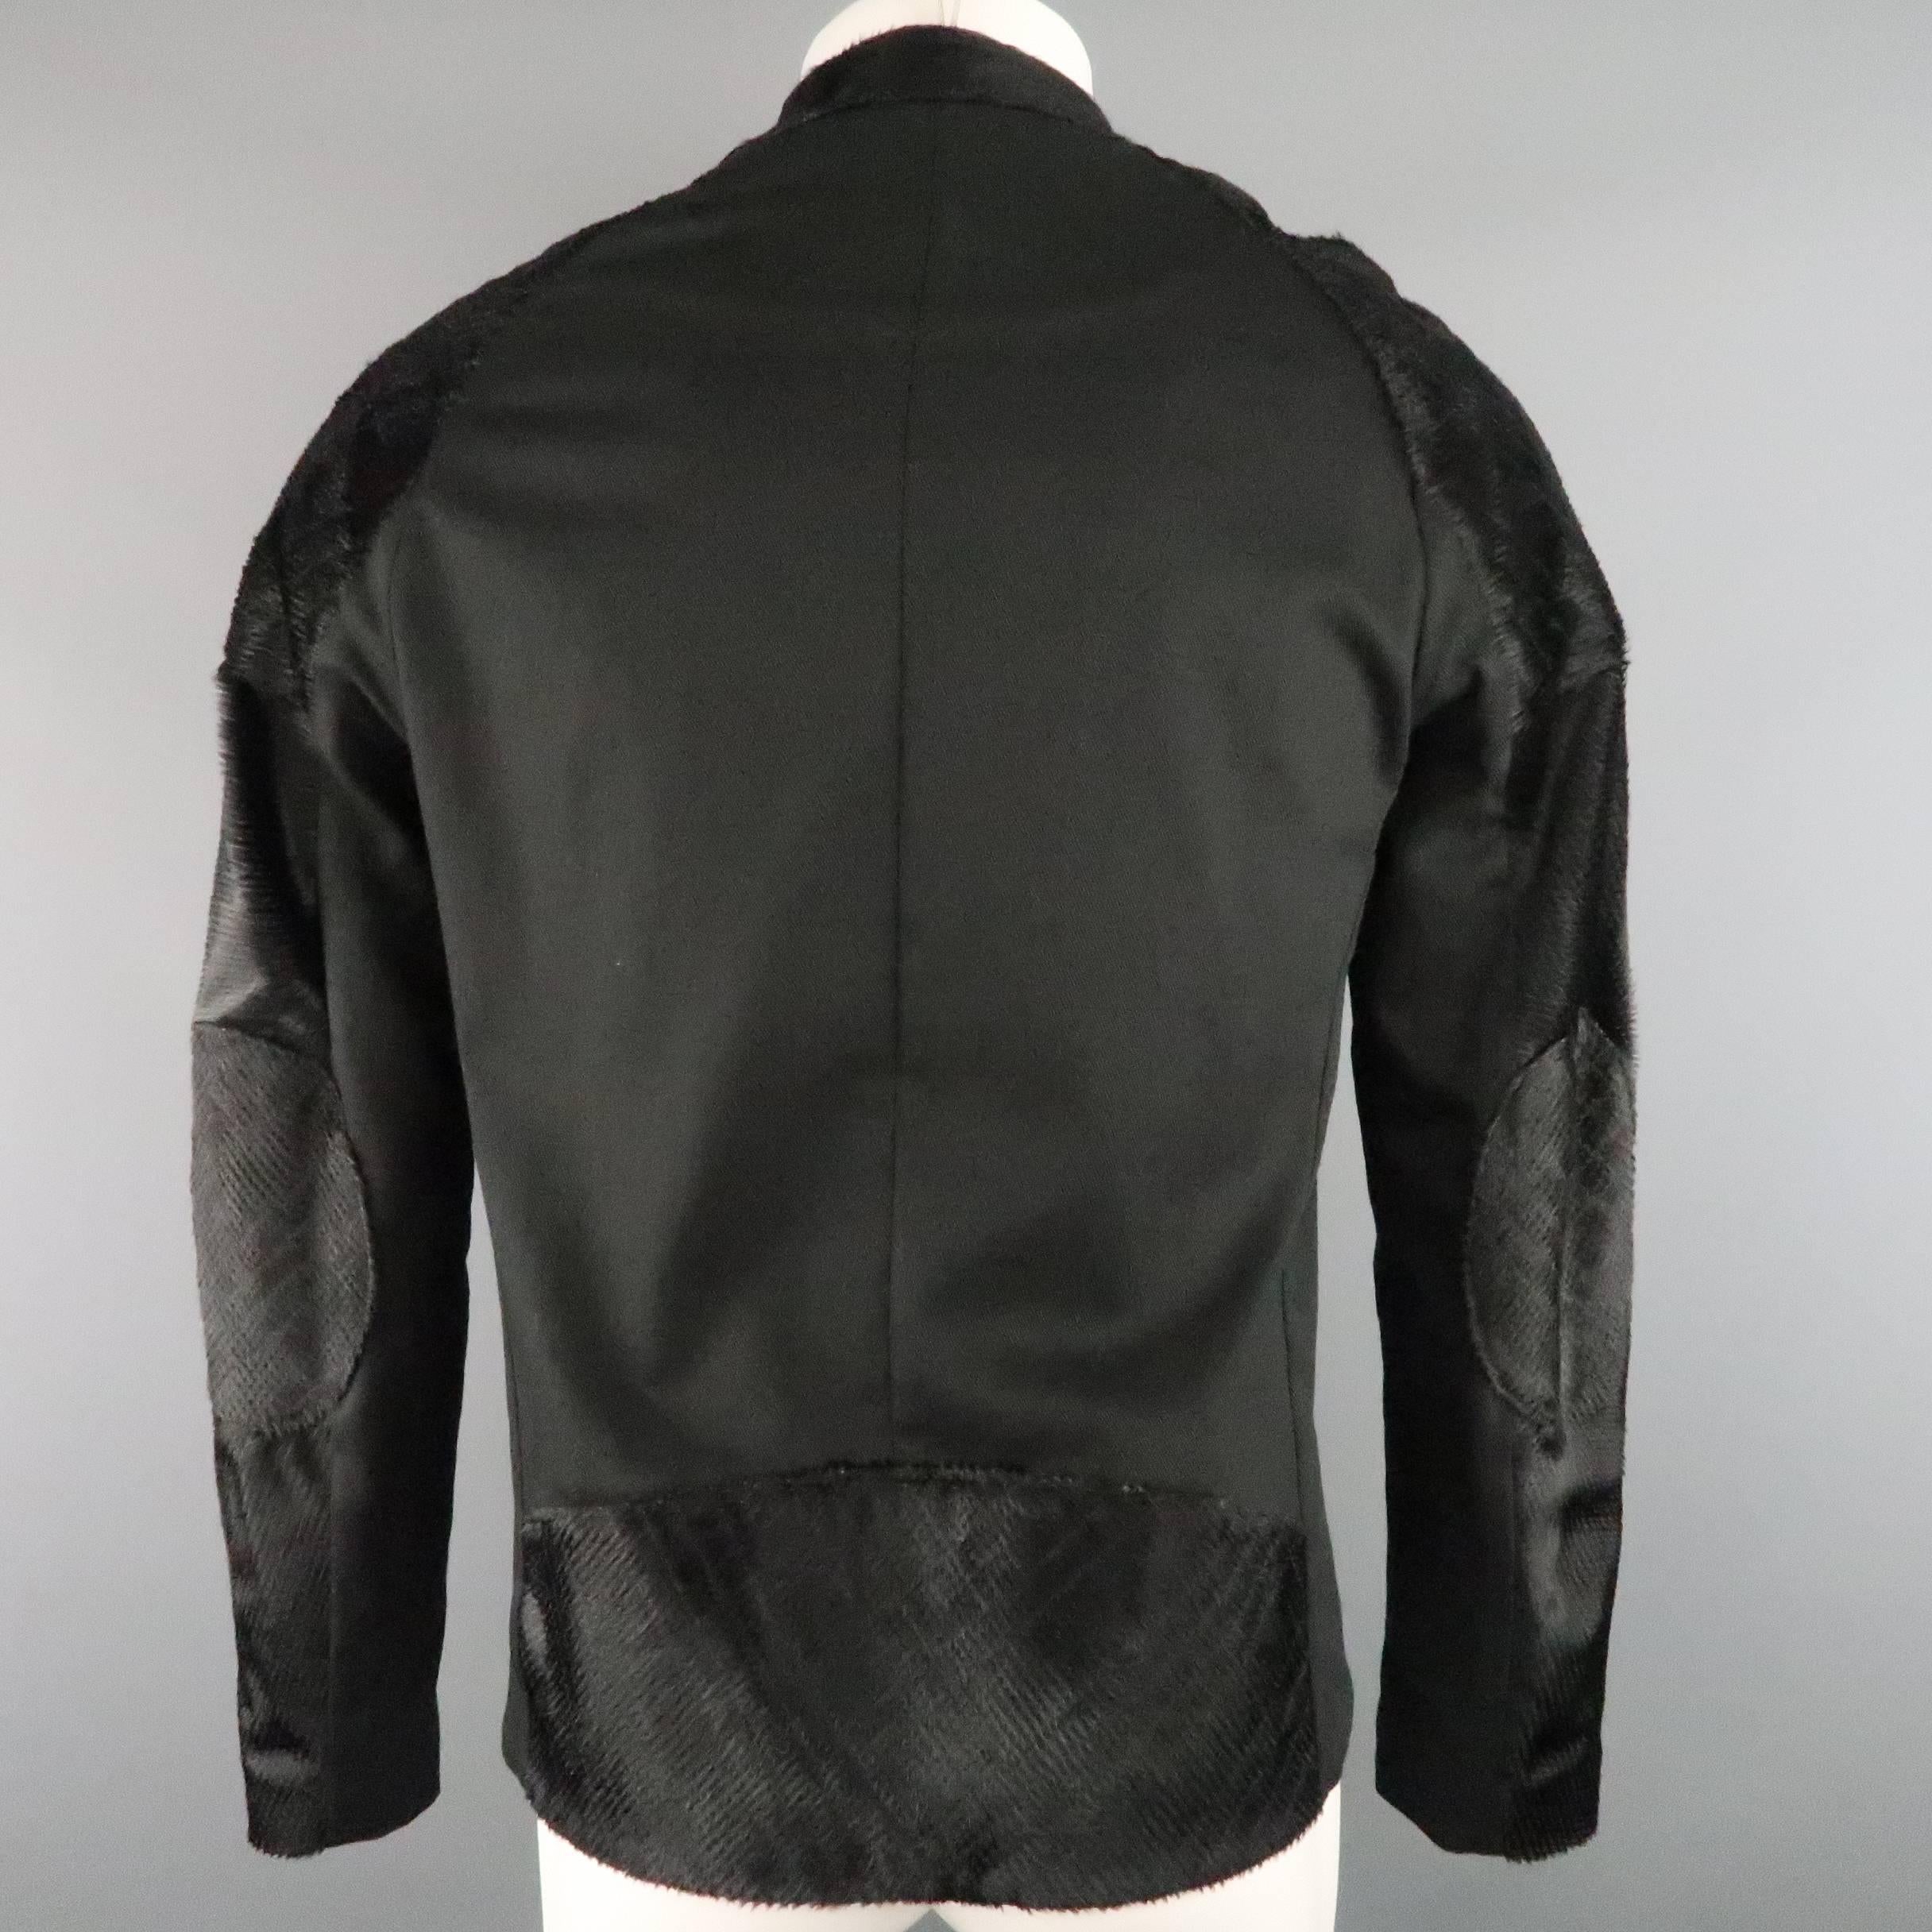 Baja East Jacket - Black Perforated Ponyhair Leather, Motorcycle Coat 1